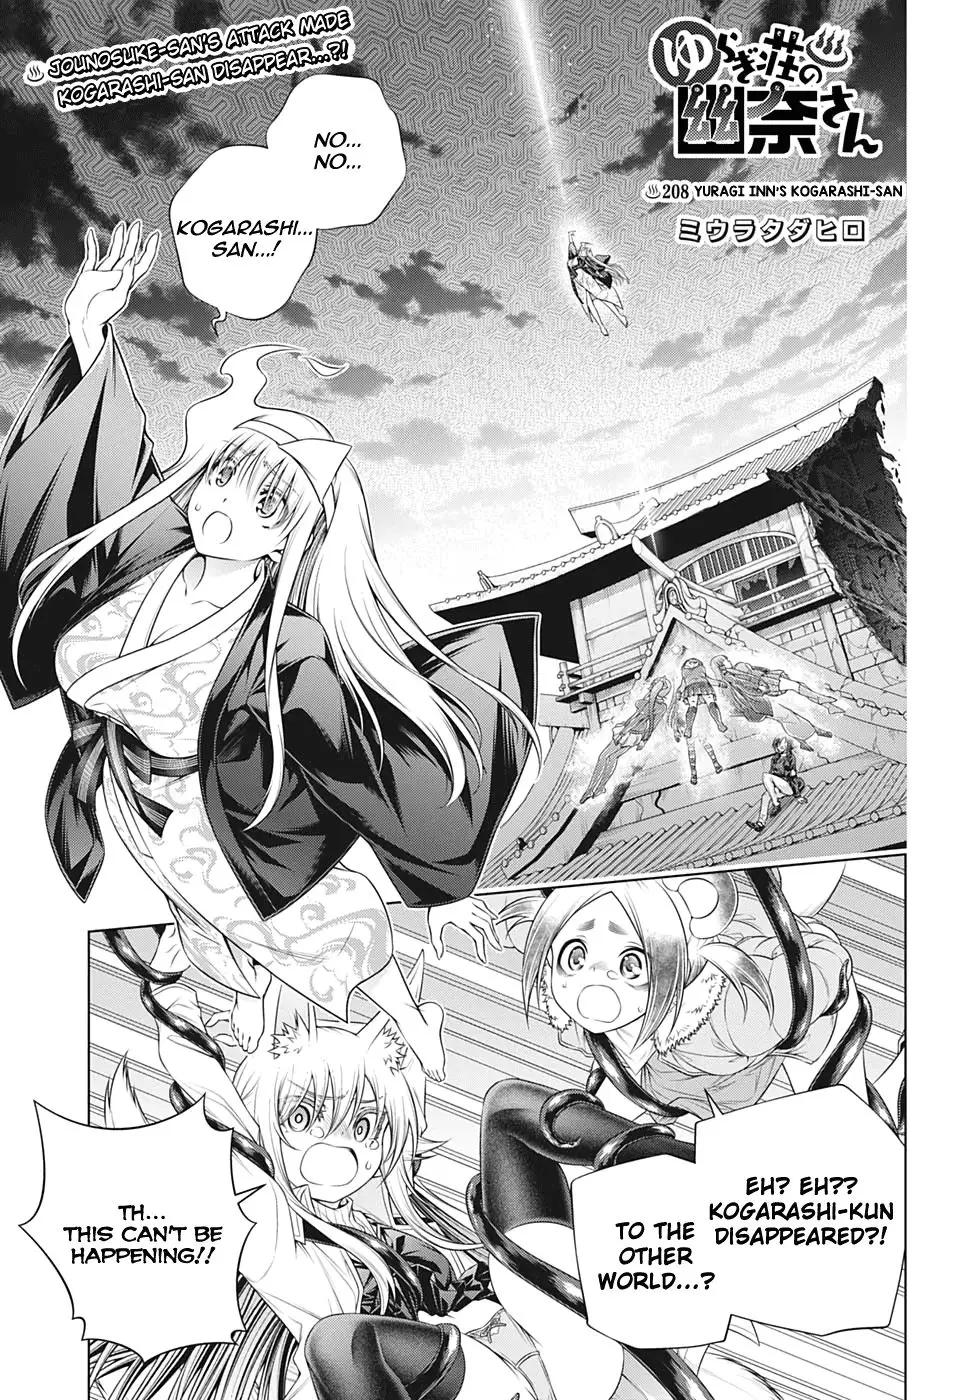 Read Yuragi-sou no Yuuna-san 209 - Oni Scan